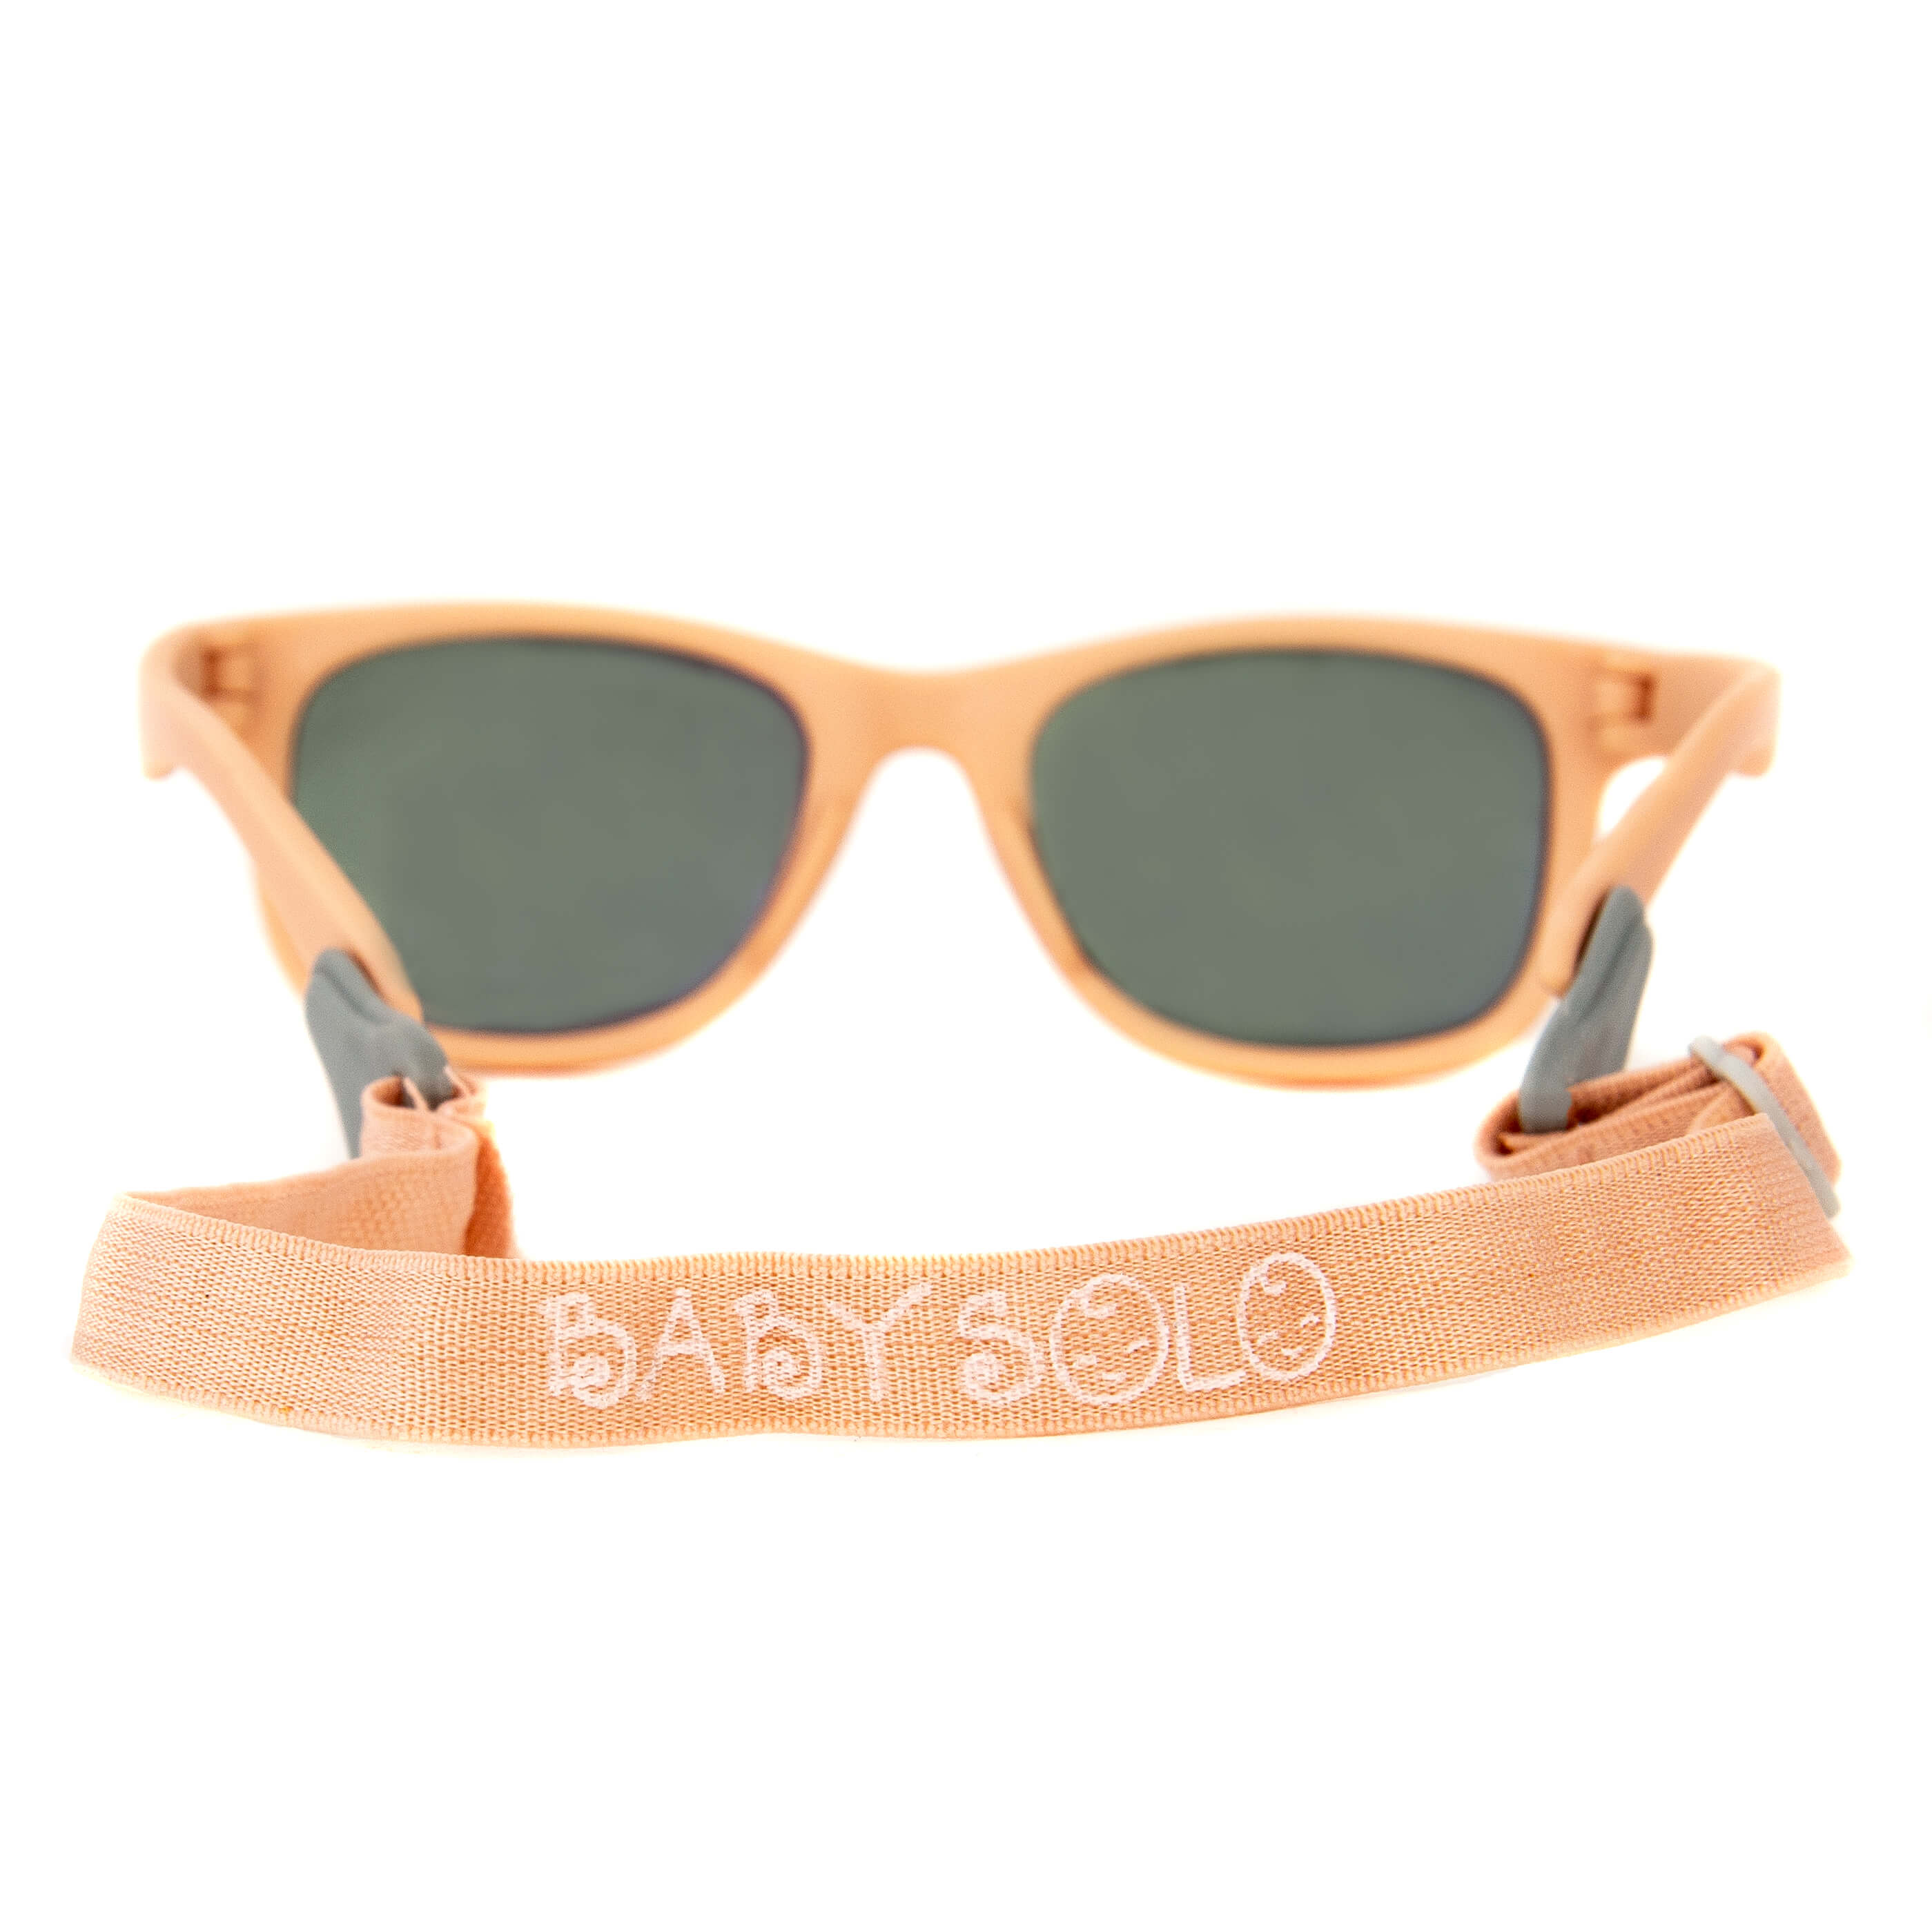 https://bebabysolo.com/wp-content/uploads/2018/09/Baby-Solo-Babyfarer-Sunglasses-Matte-Pink-w-Rose-Gold-Mirror-Lens-4.jpg